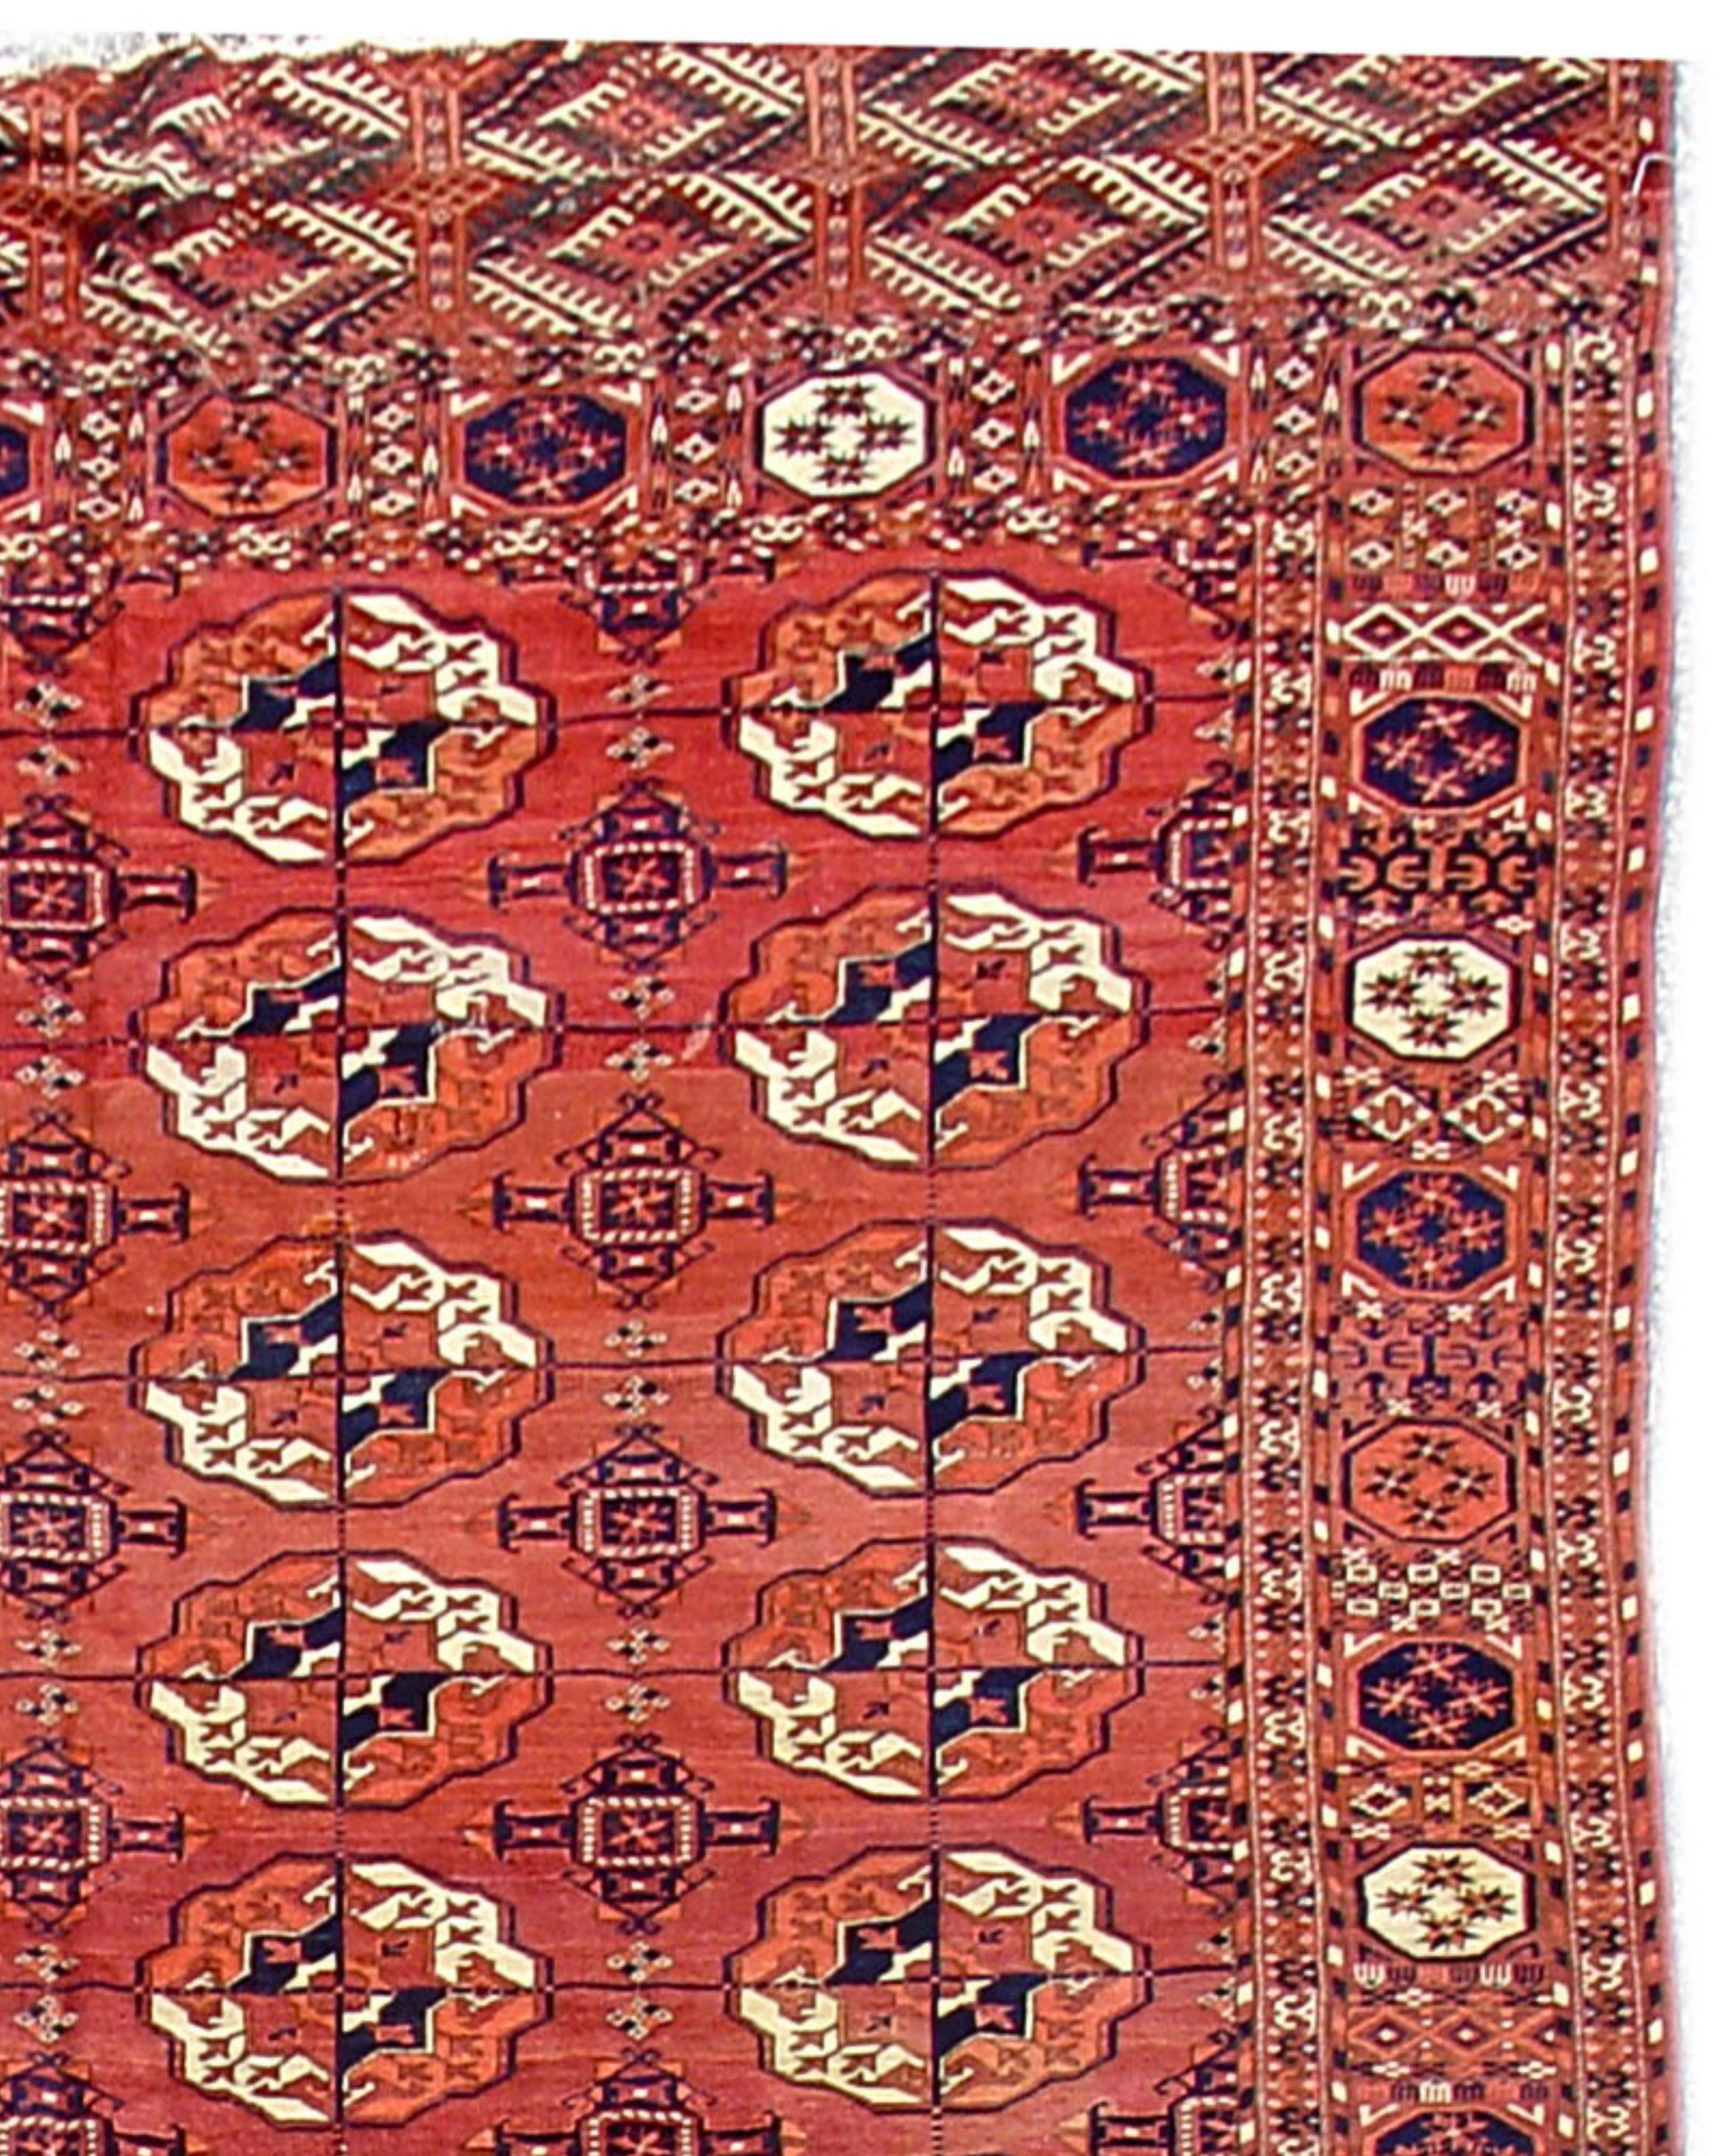 Antique Turkmen Tekke Main Carpet Rug, 19th Century

Additional information:
Dimensions: 7'4